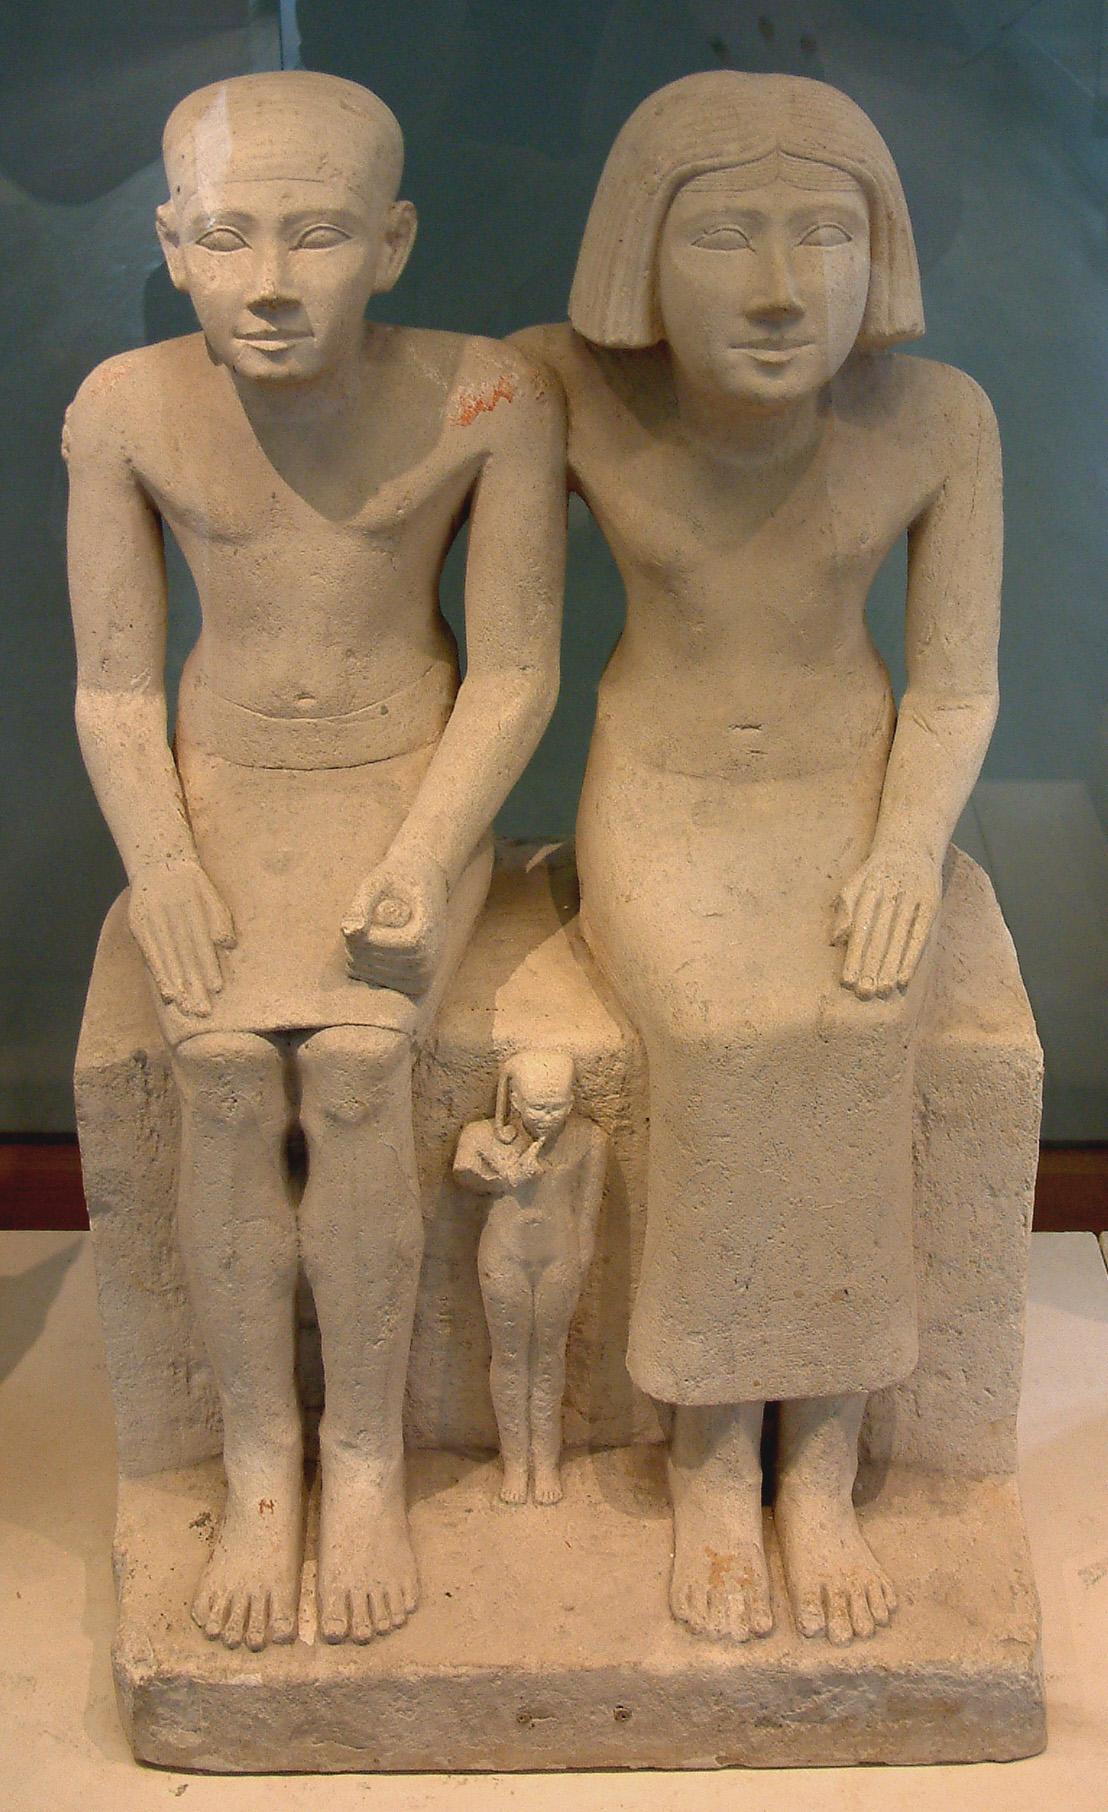 http://upload.wikimedia.org/wikipedia/commons/7/74/Egypte_louvre_288_couple.jpg